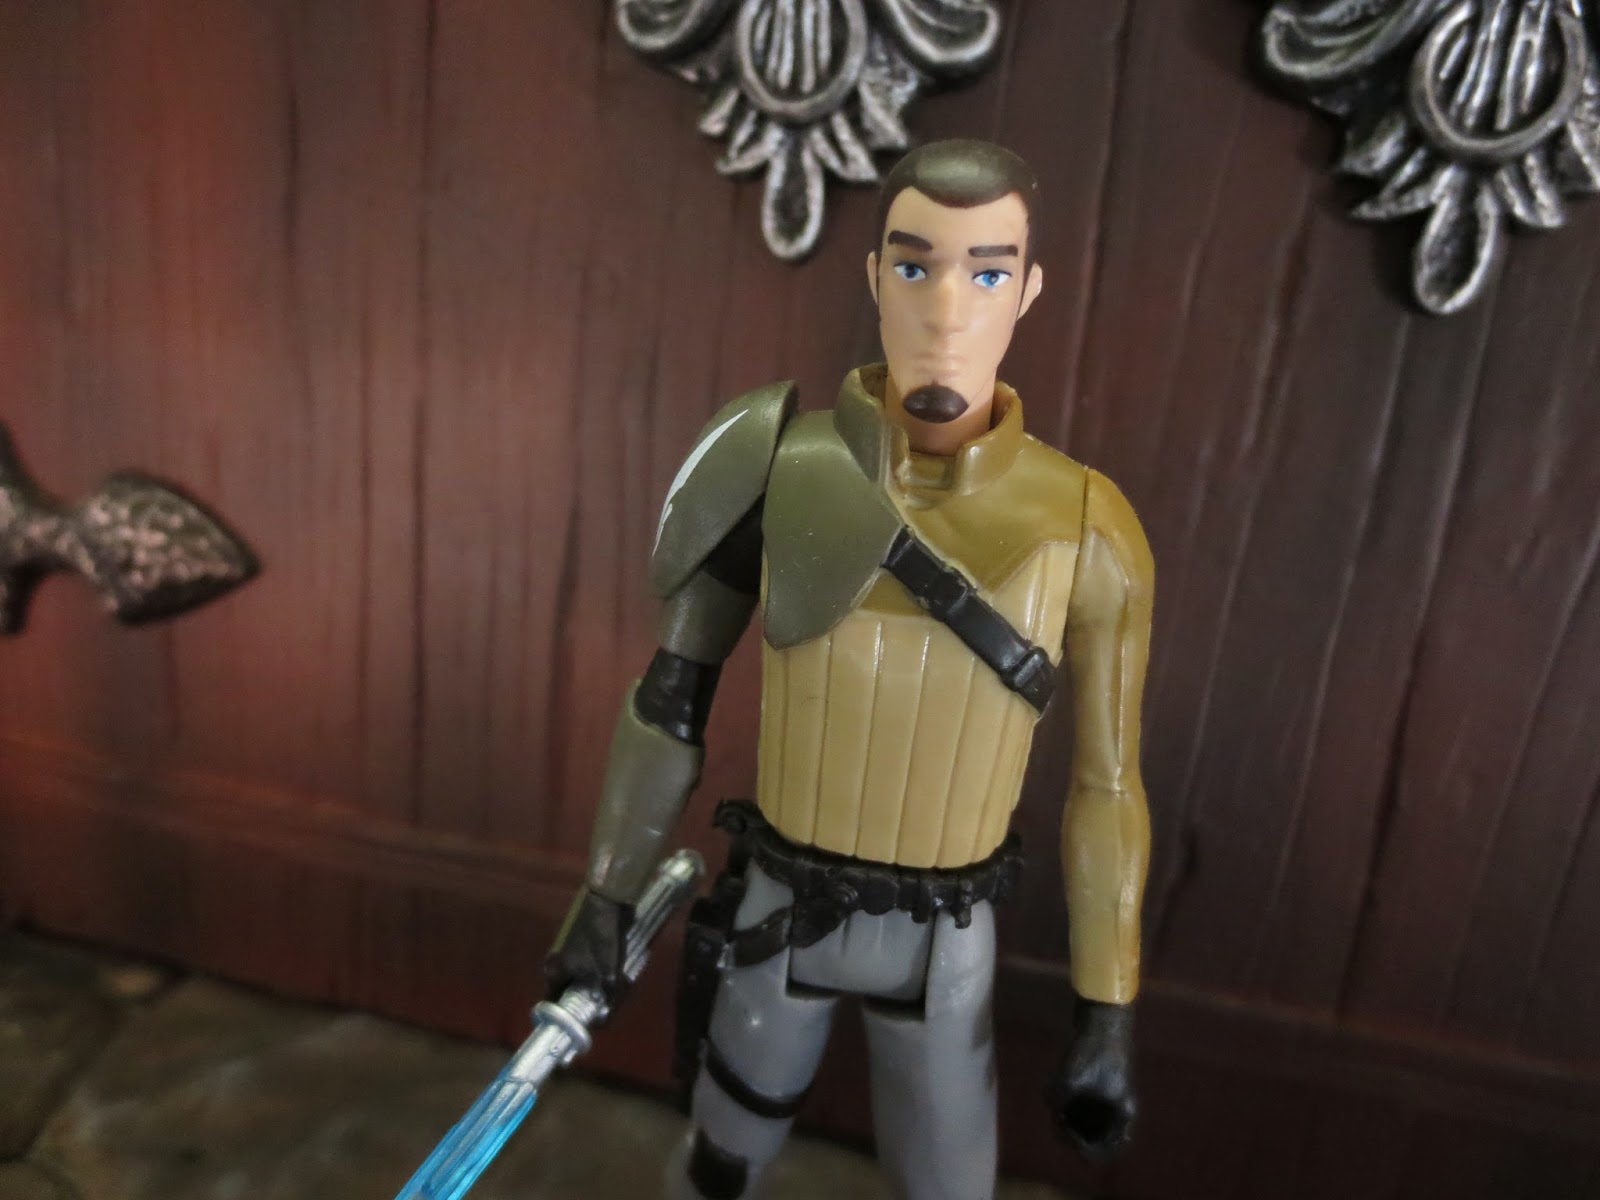 Star Wars: Kanan Jarrus Jedi Knight Action Figure New in 